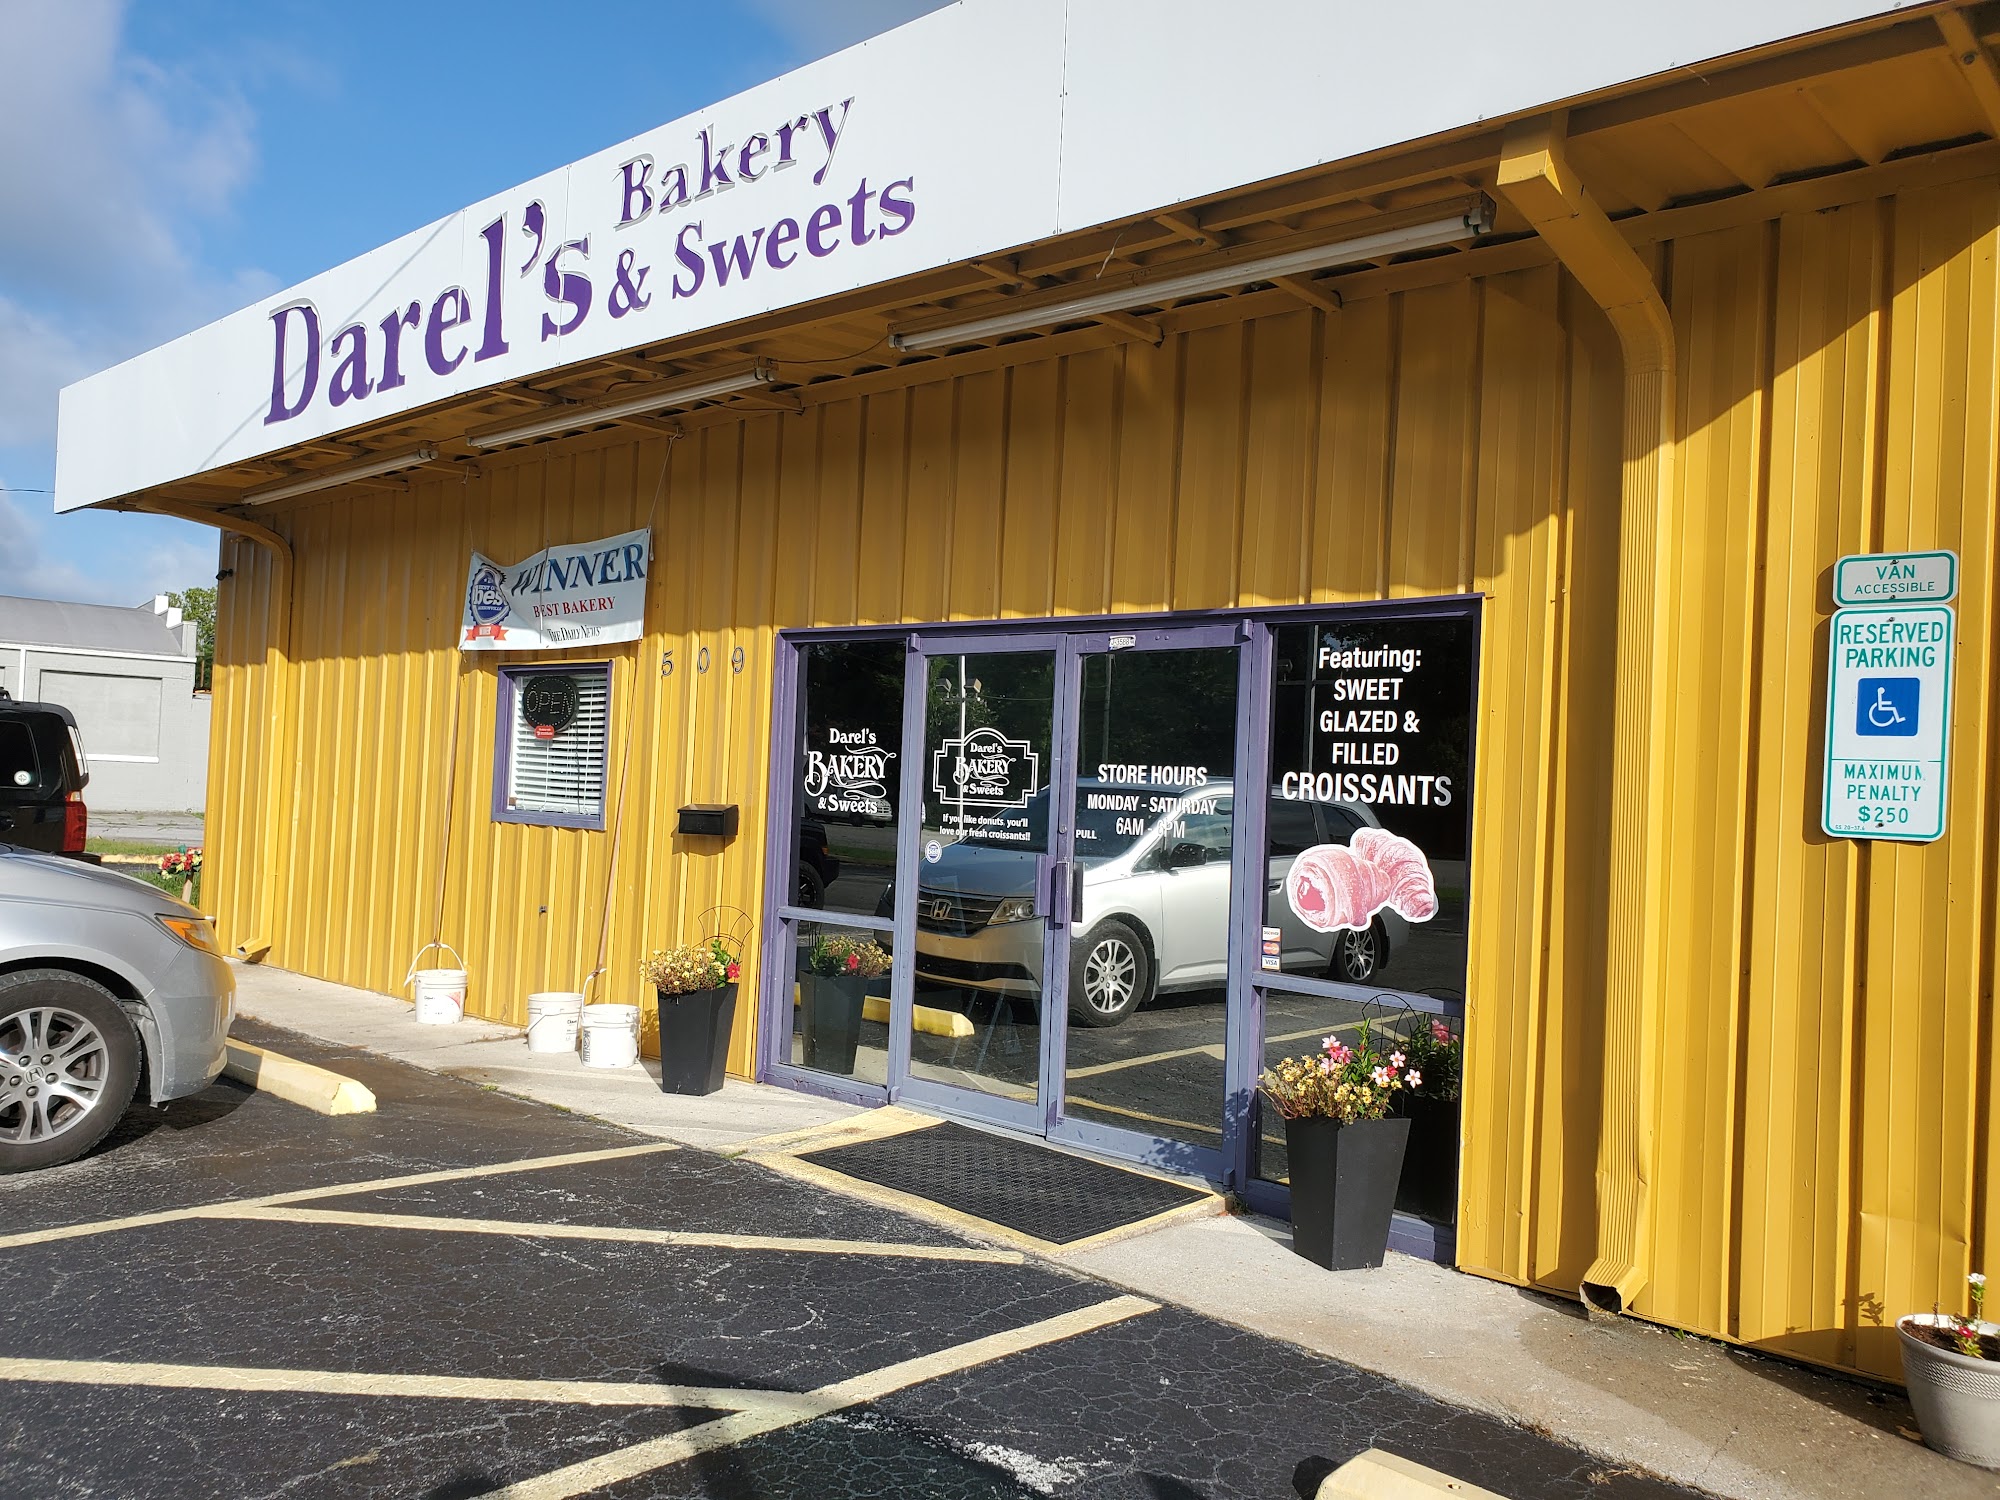 Darel's Bakery & Sweets